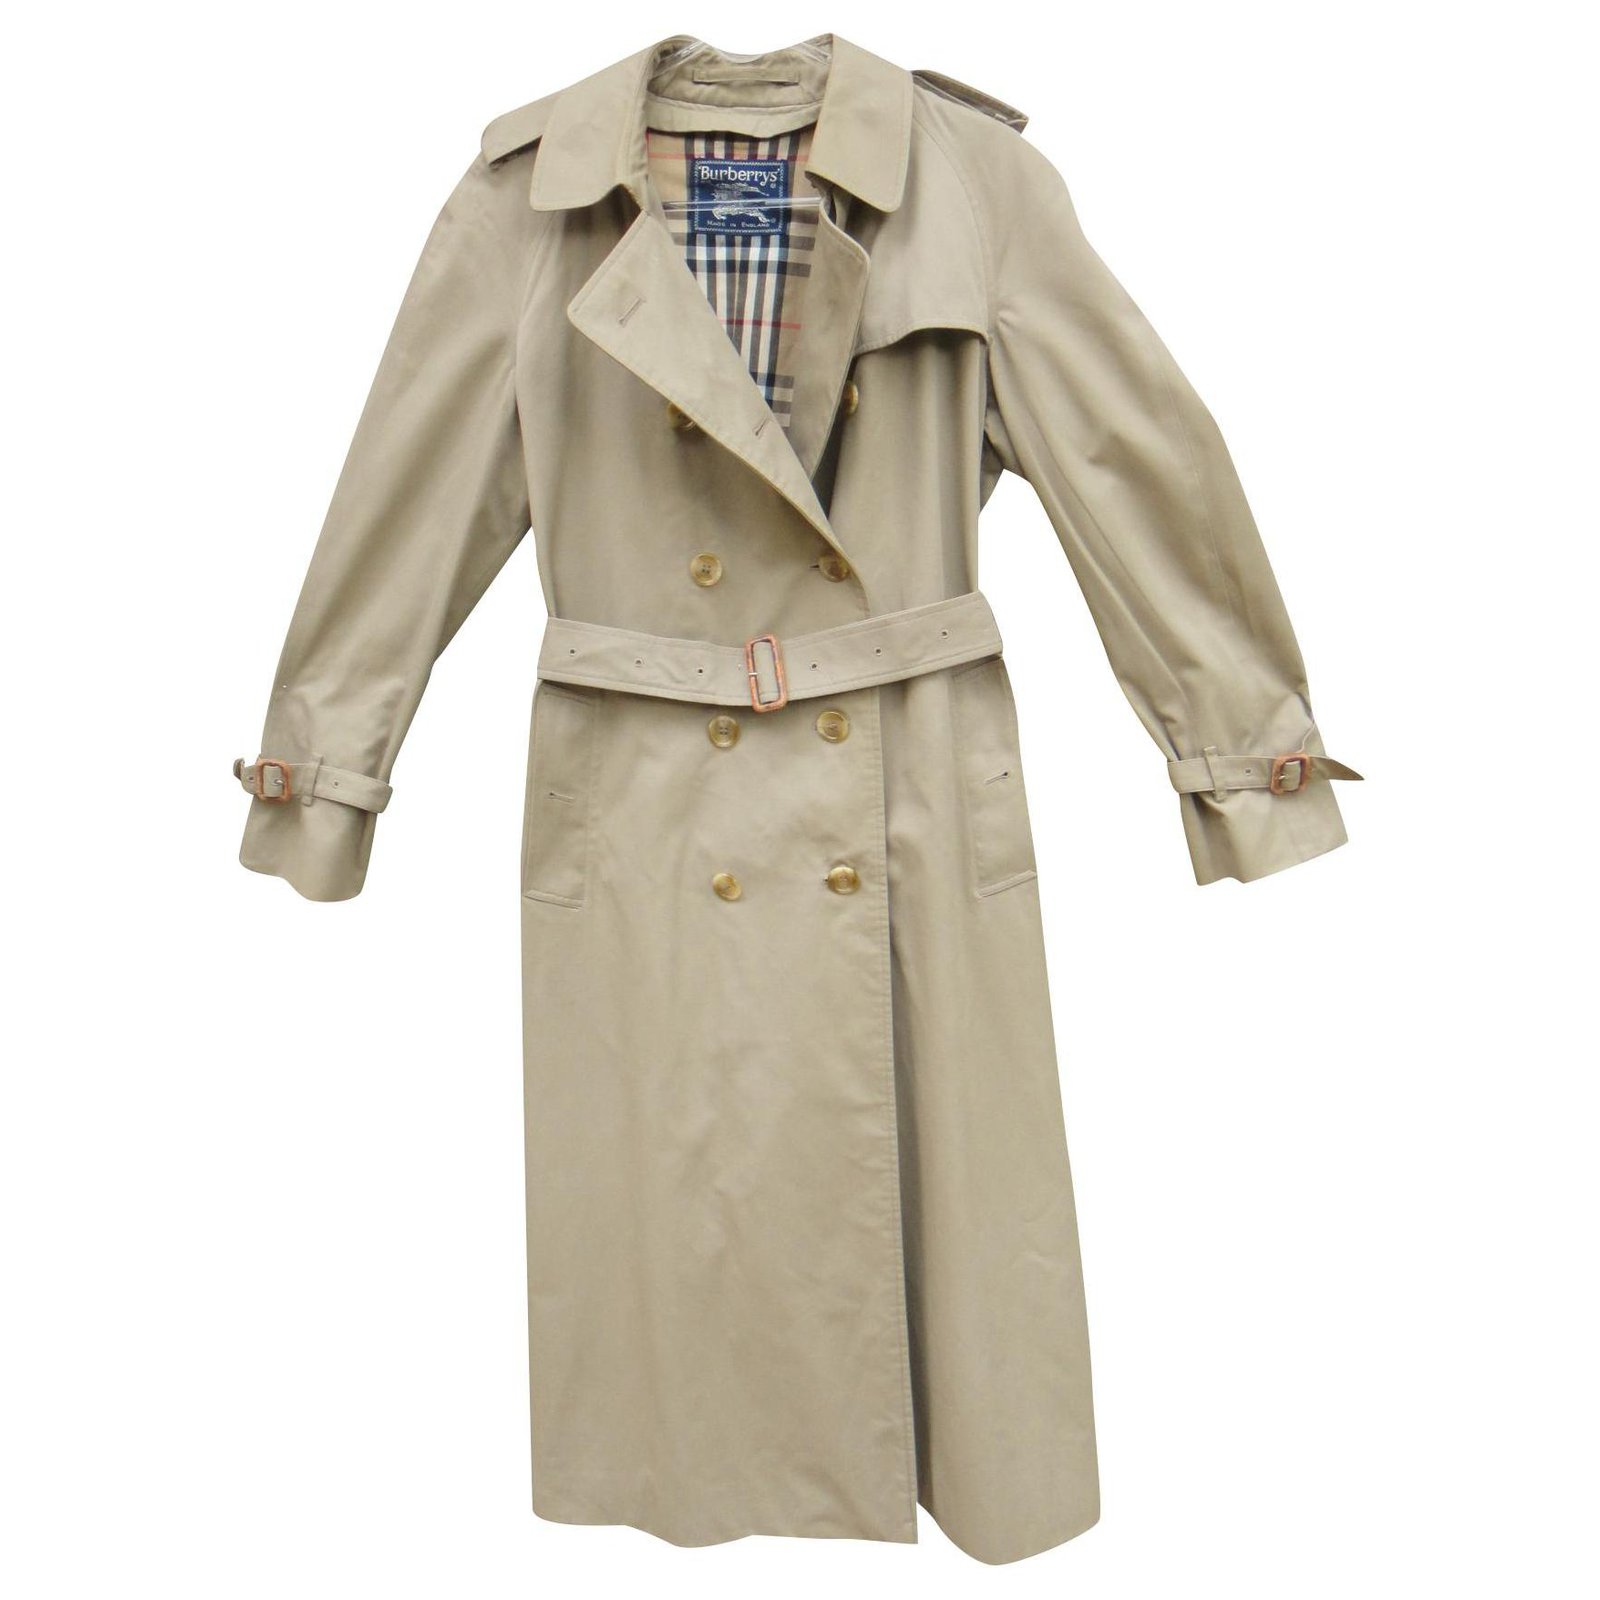 burberry trench coat sale uk